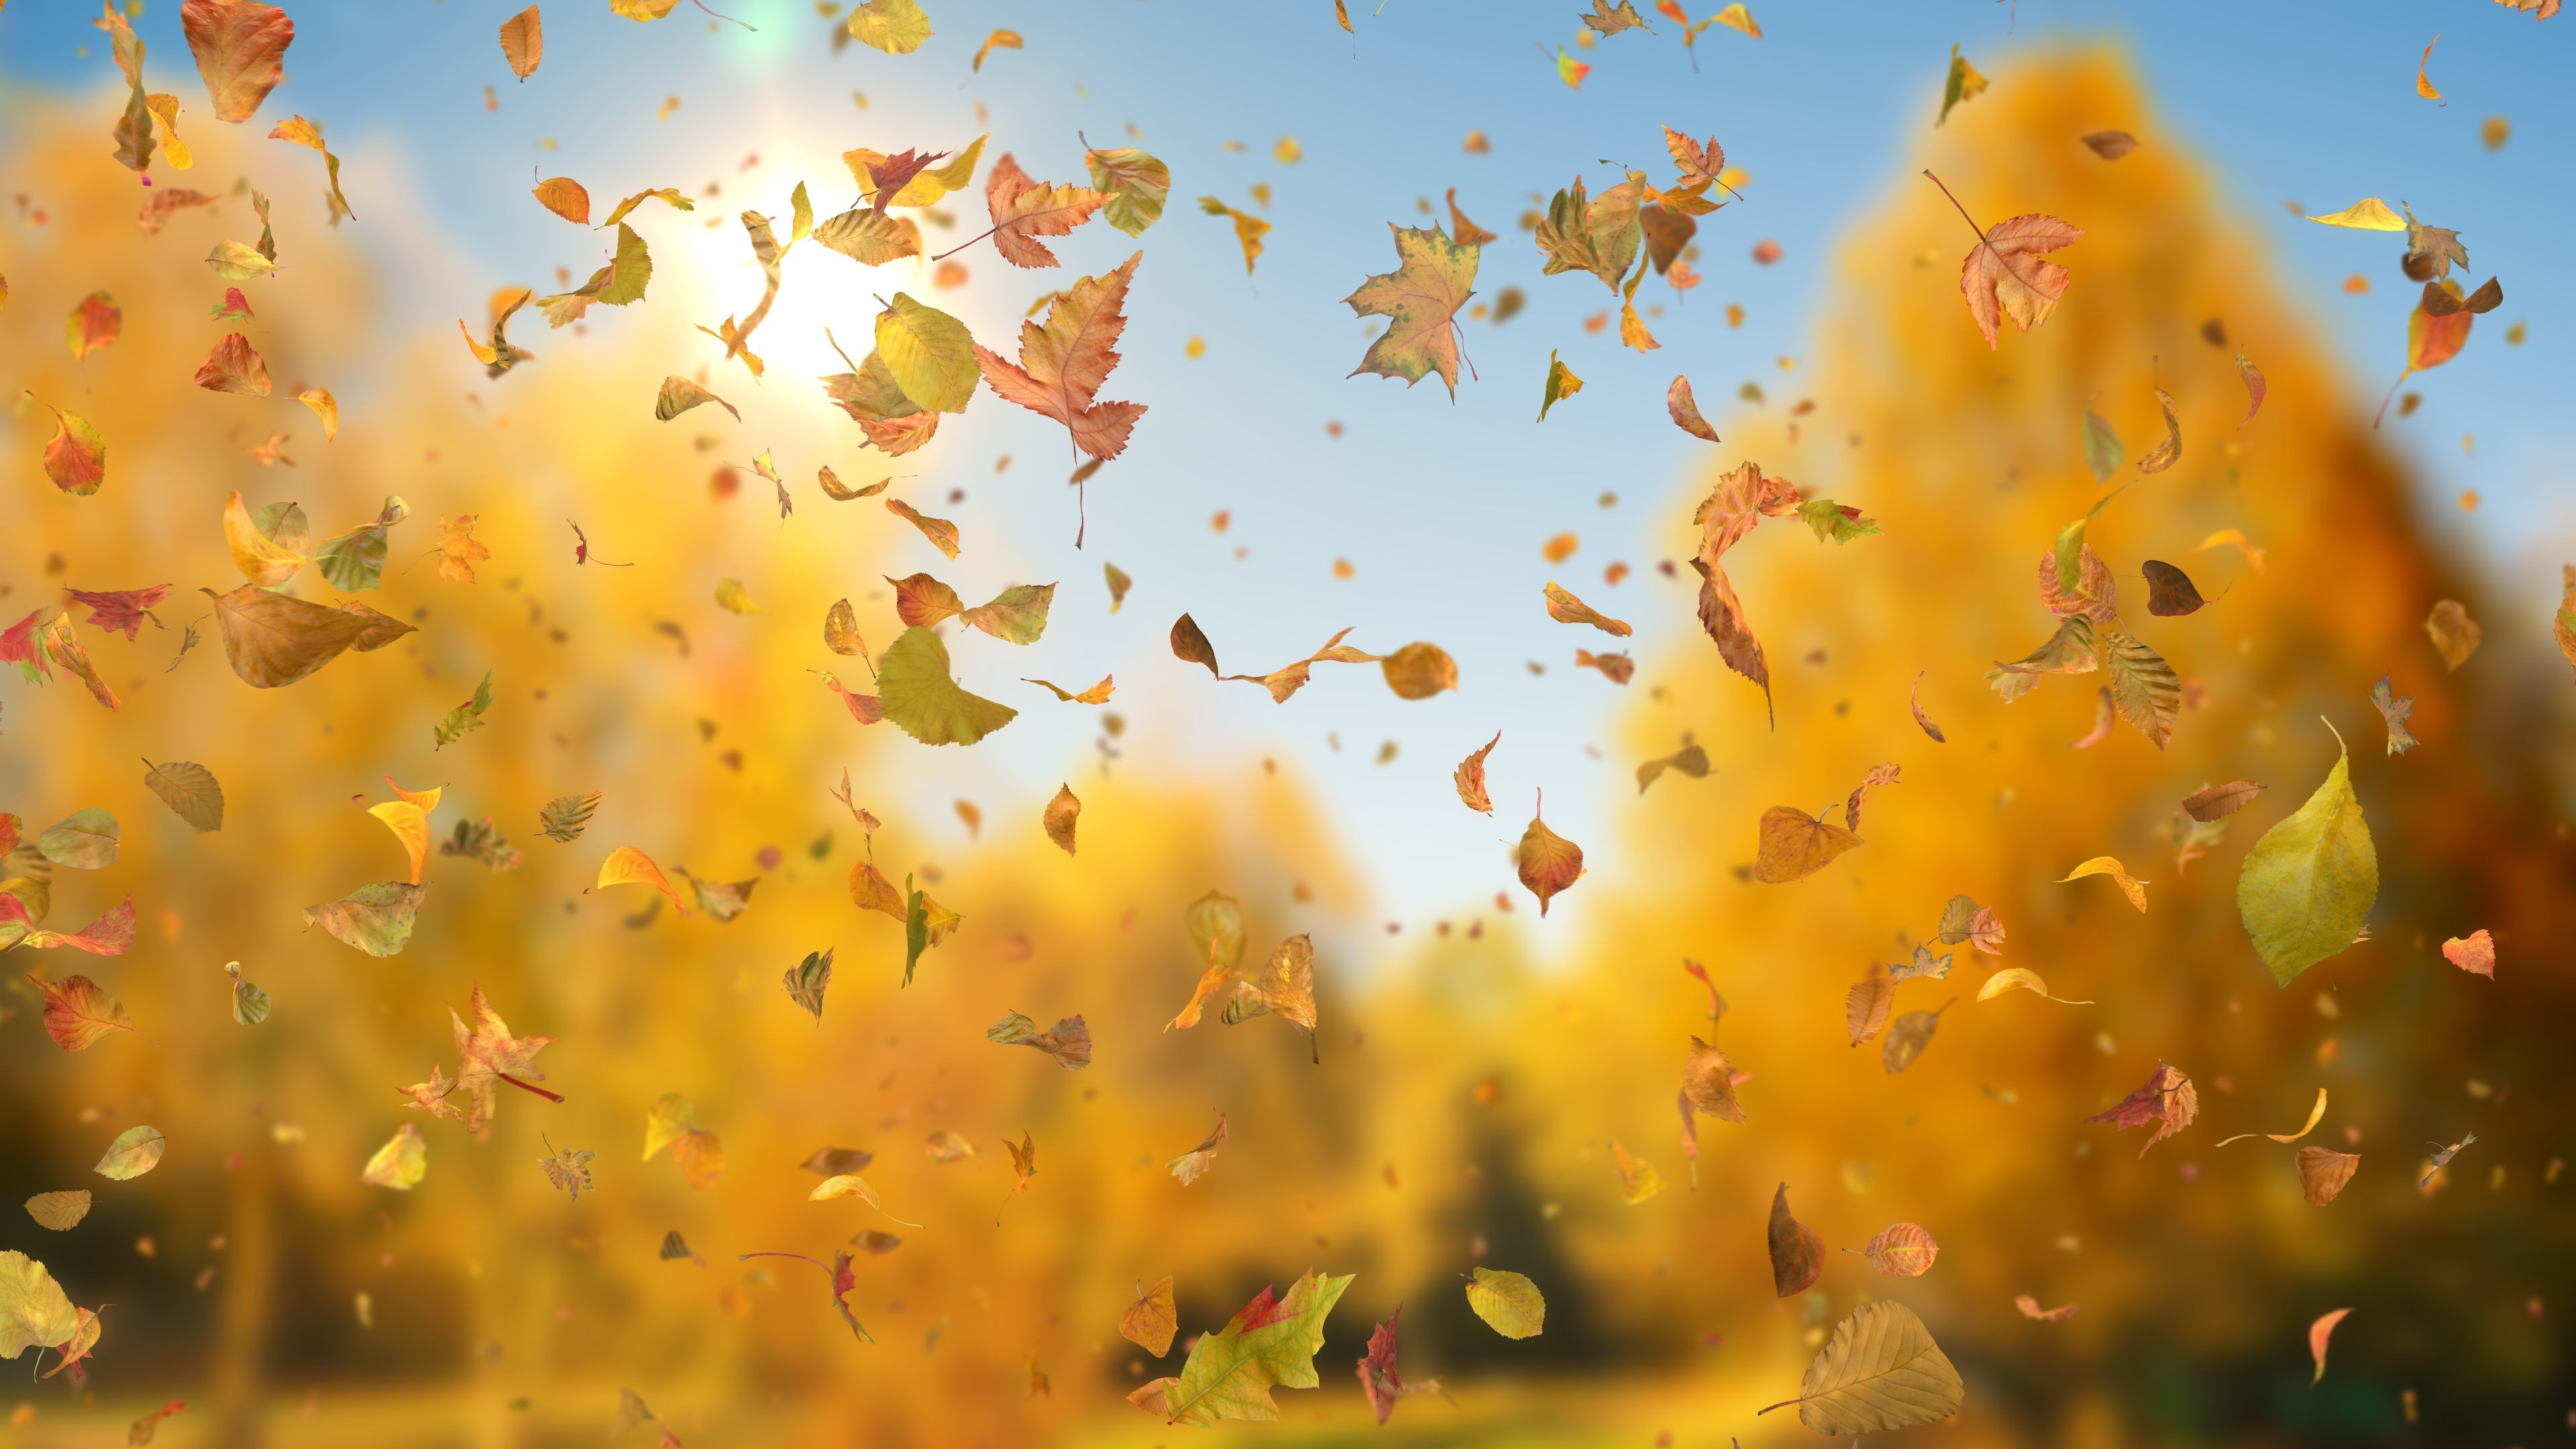 3840x2160 'Autumn Fall Leaves Sideways' - Realistic Falling Leaves Motion Background  Loop-SampleStill